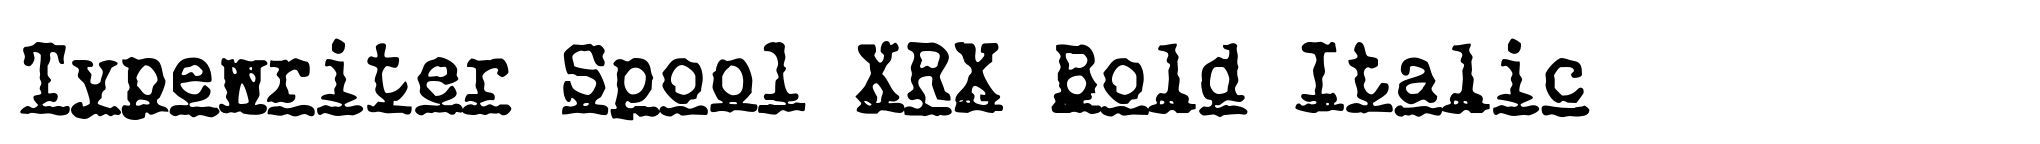 Typewriter Spool XRX Bold Italic image